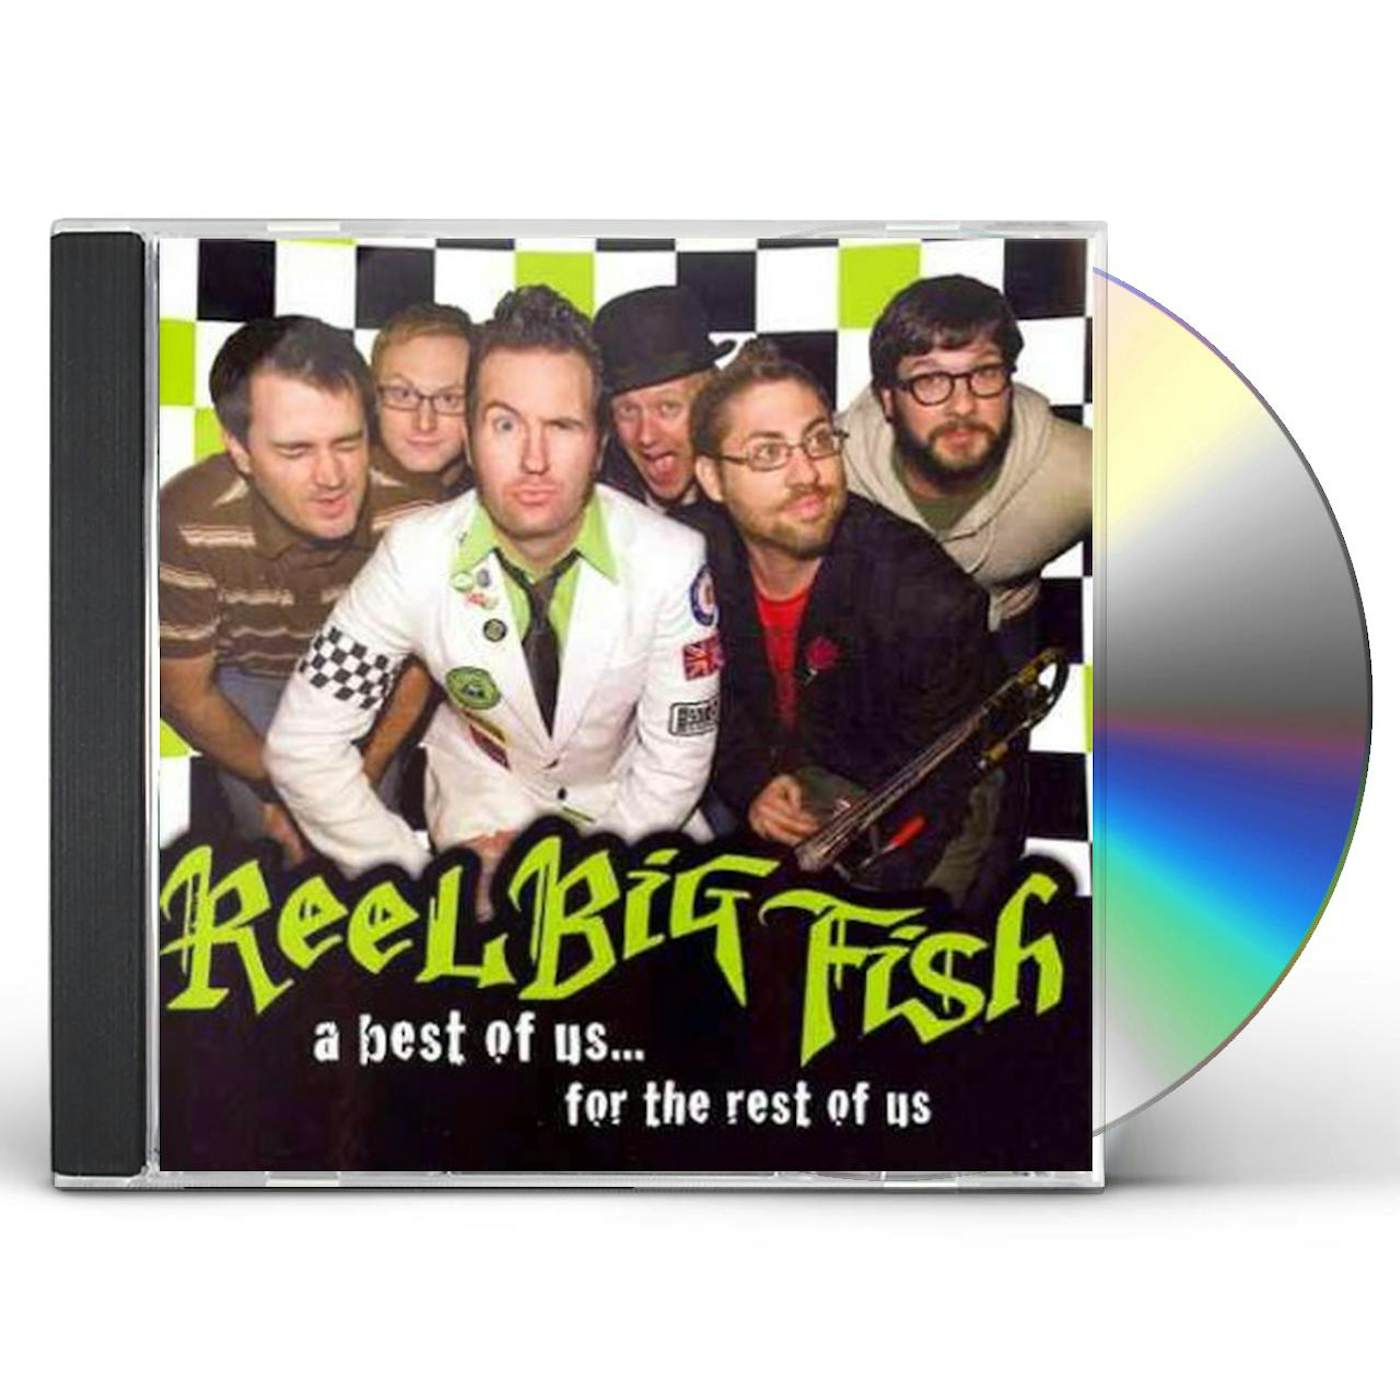 Vinyl Reel Big Fish - Candy Coated Fury [vinyl] ☆ SUPERSHOP ☆ tvoj obchod ☆  cd & dvd, vinyly, filmové DVD a Bluray